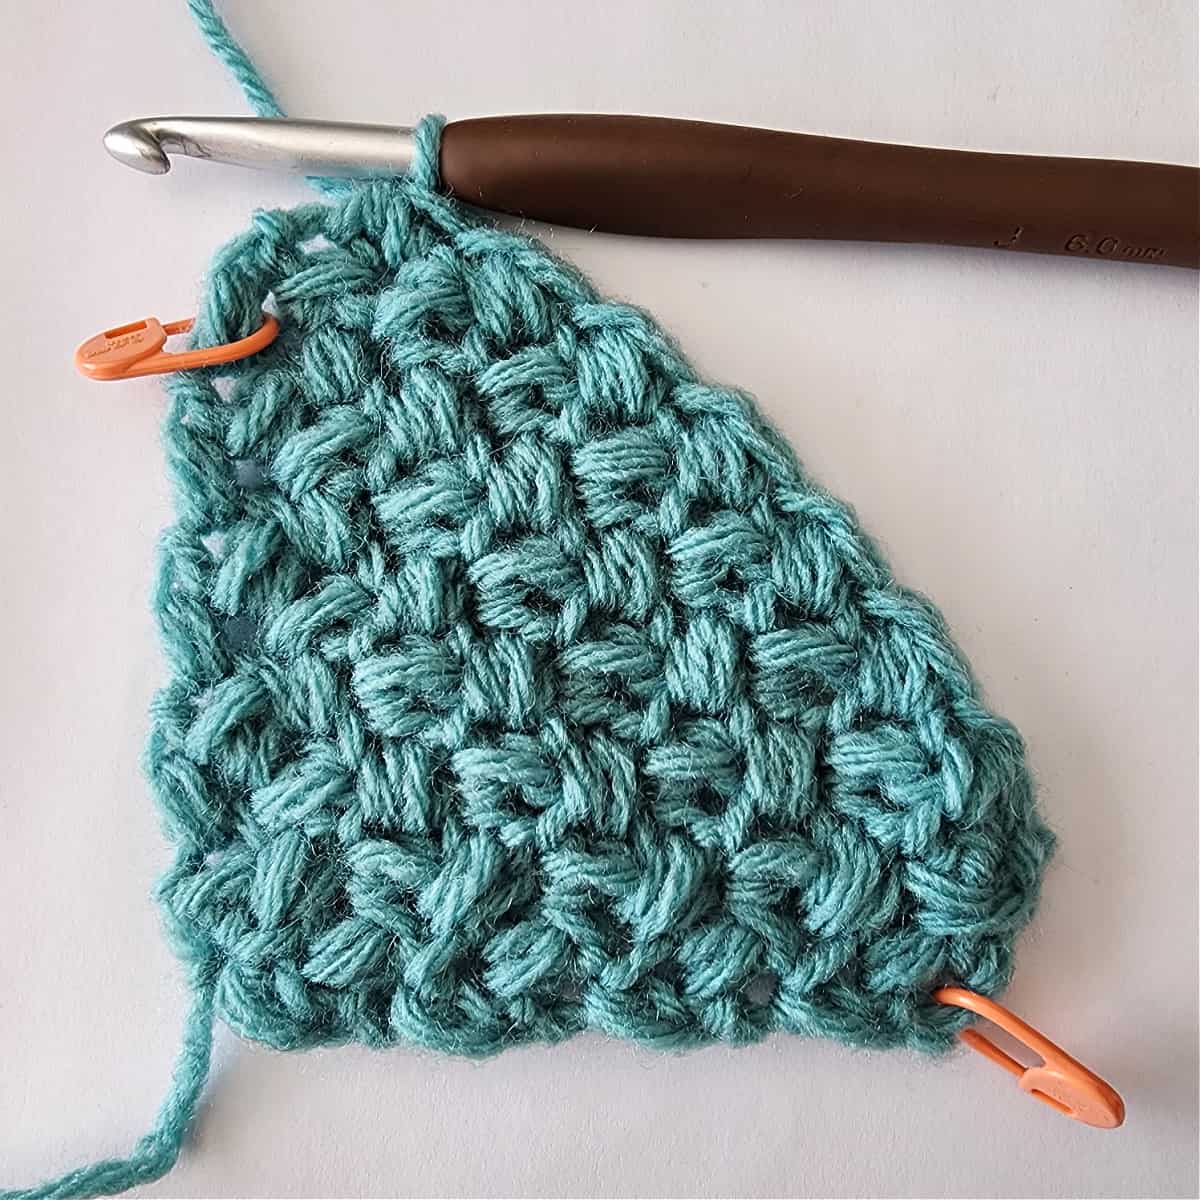 Aqua color yarn swatch of mini bean stitch worked corner to corner.